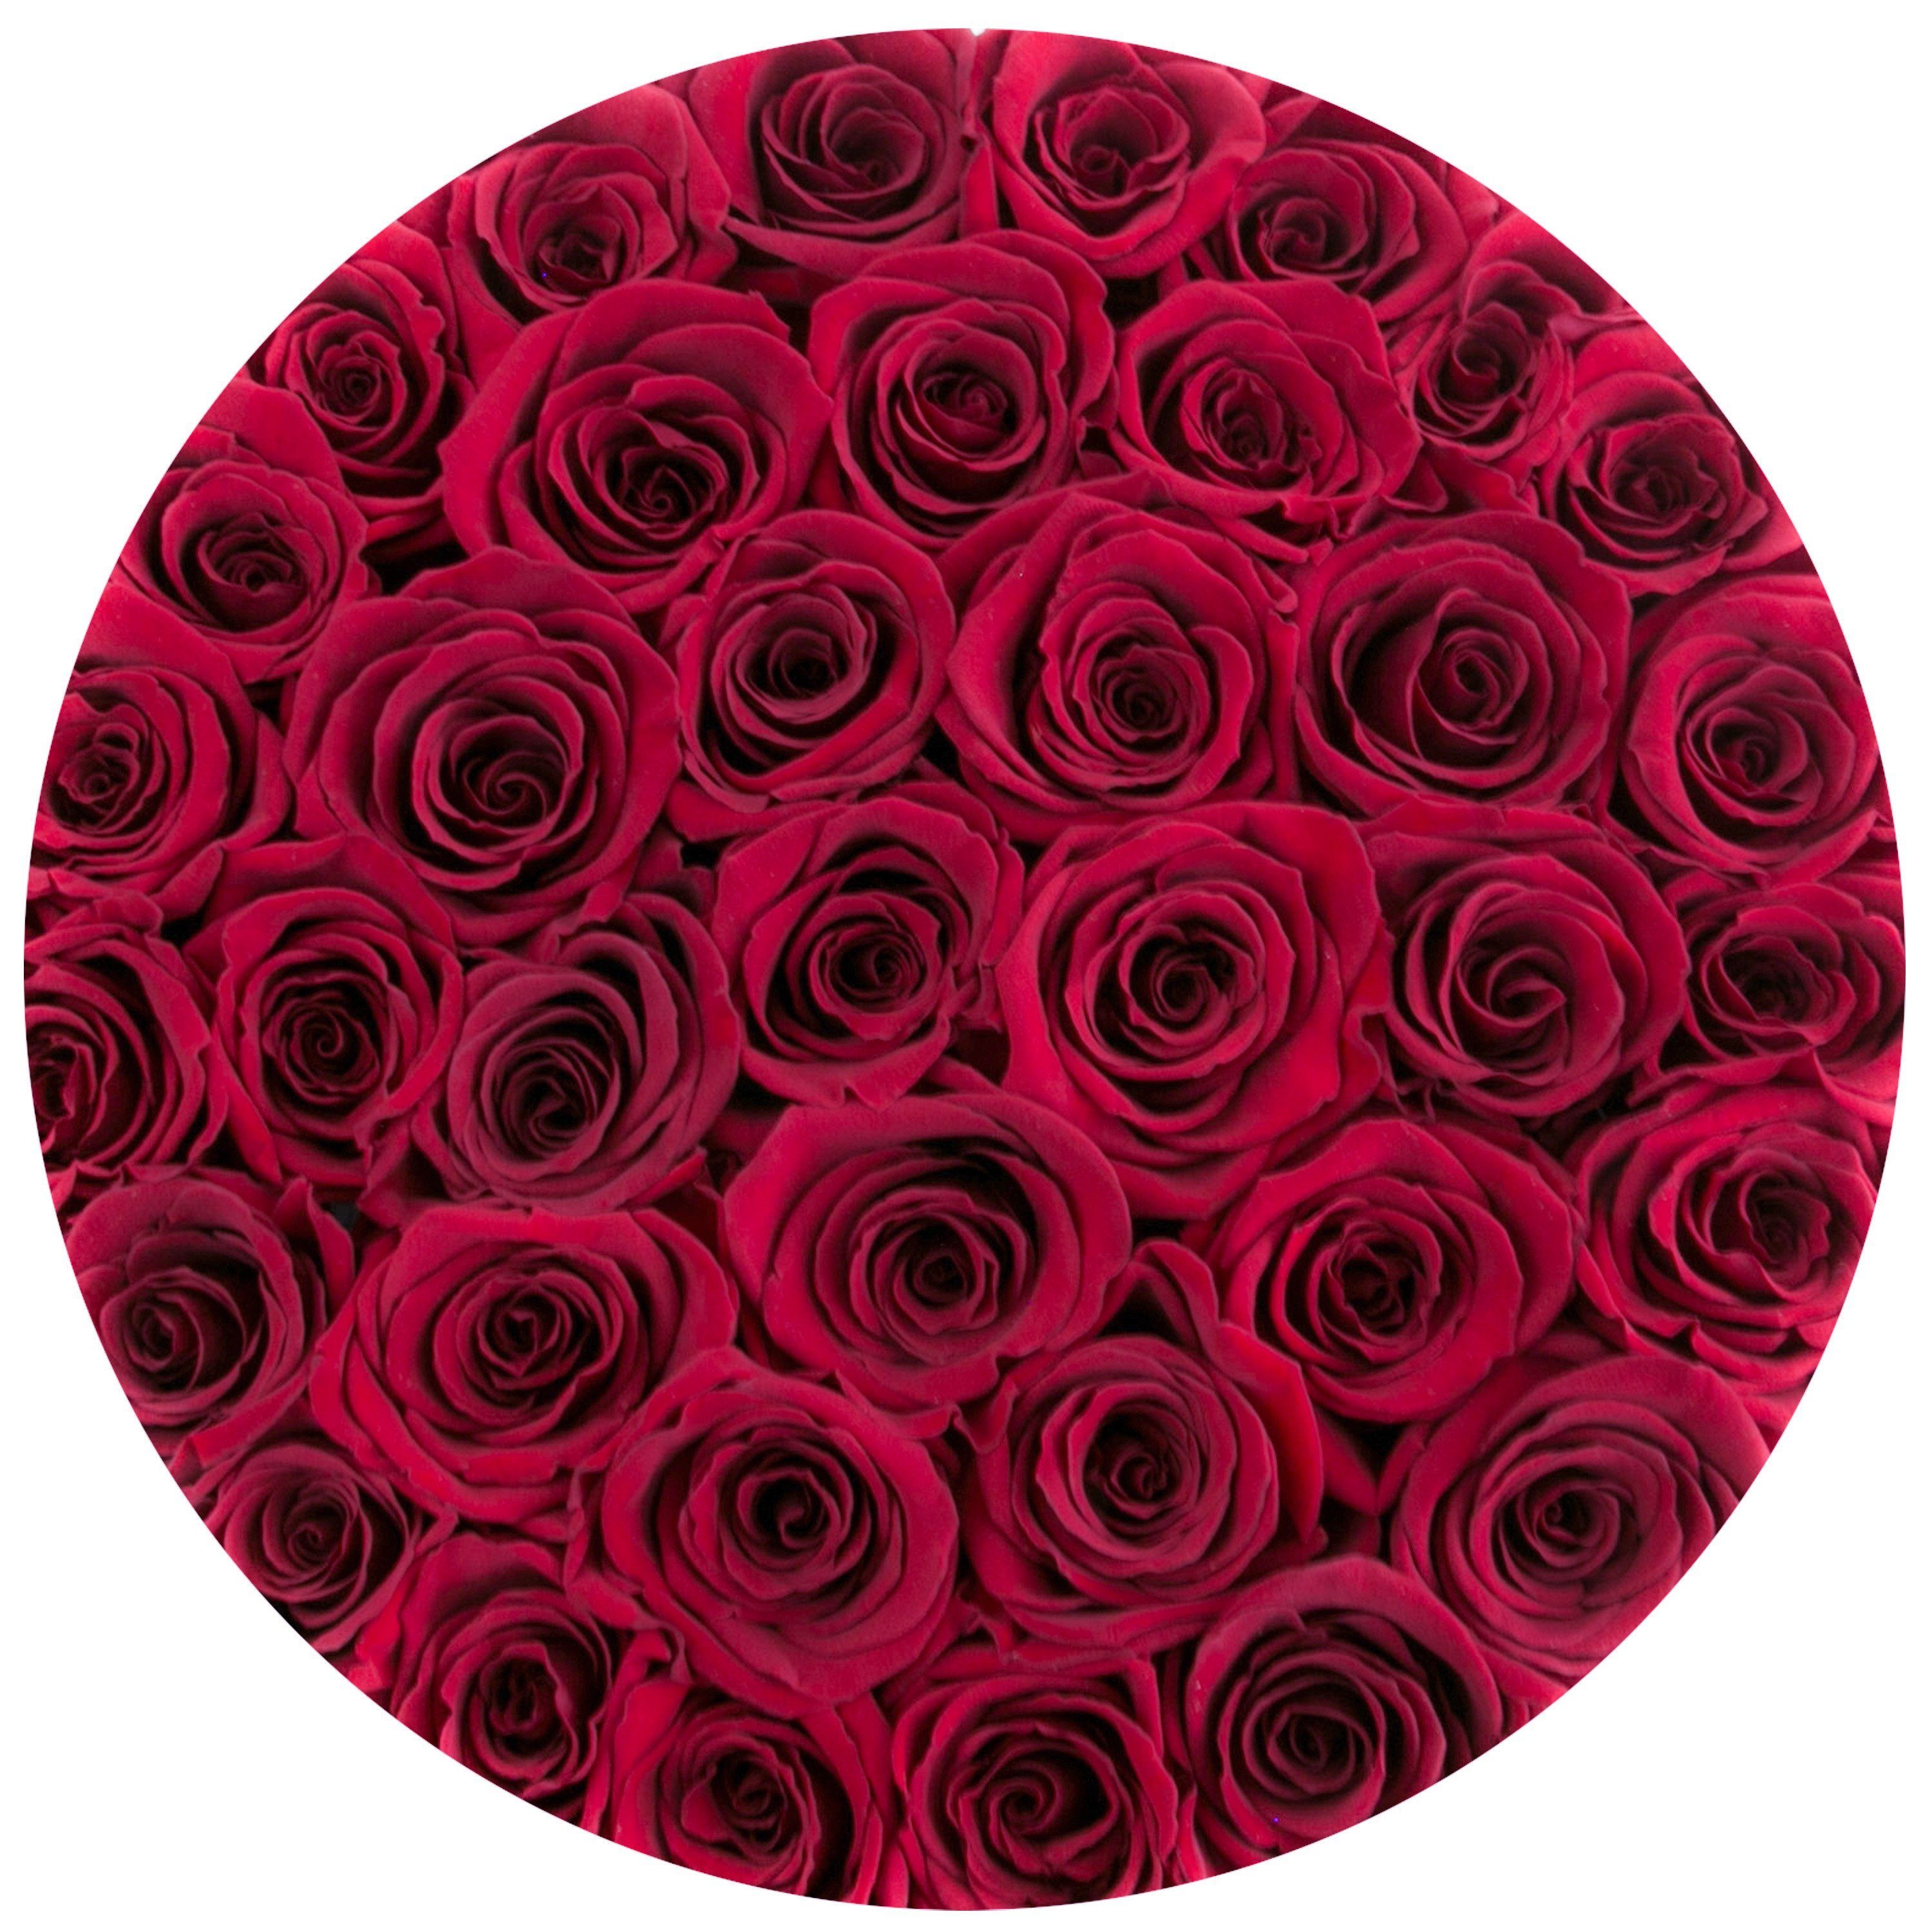 medium round box - white - burgundy roses burgundy eternity roses - the million roses